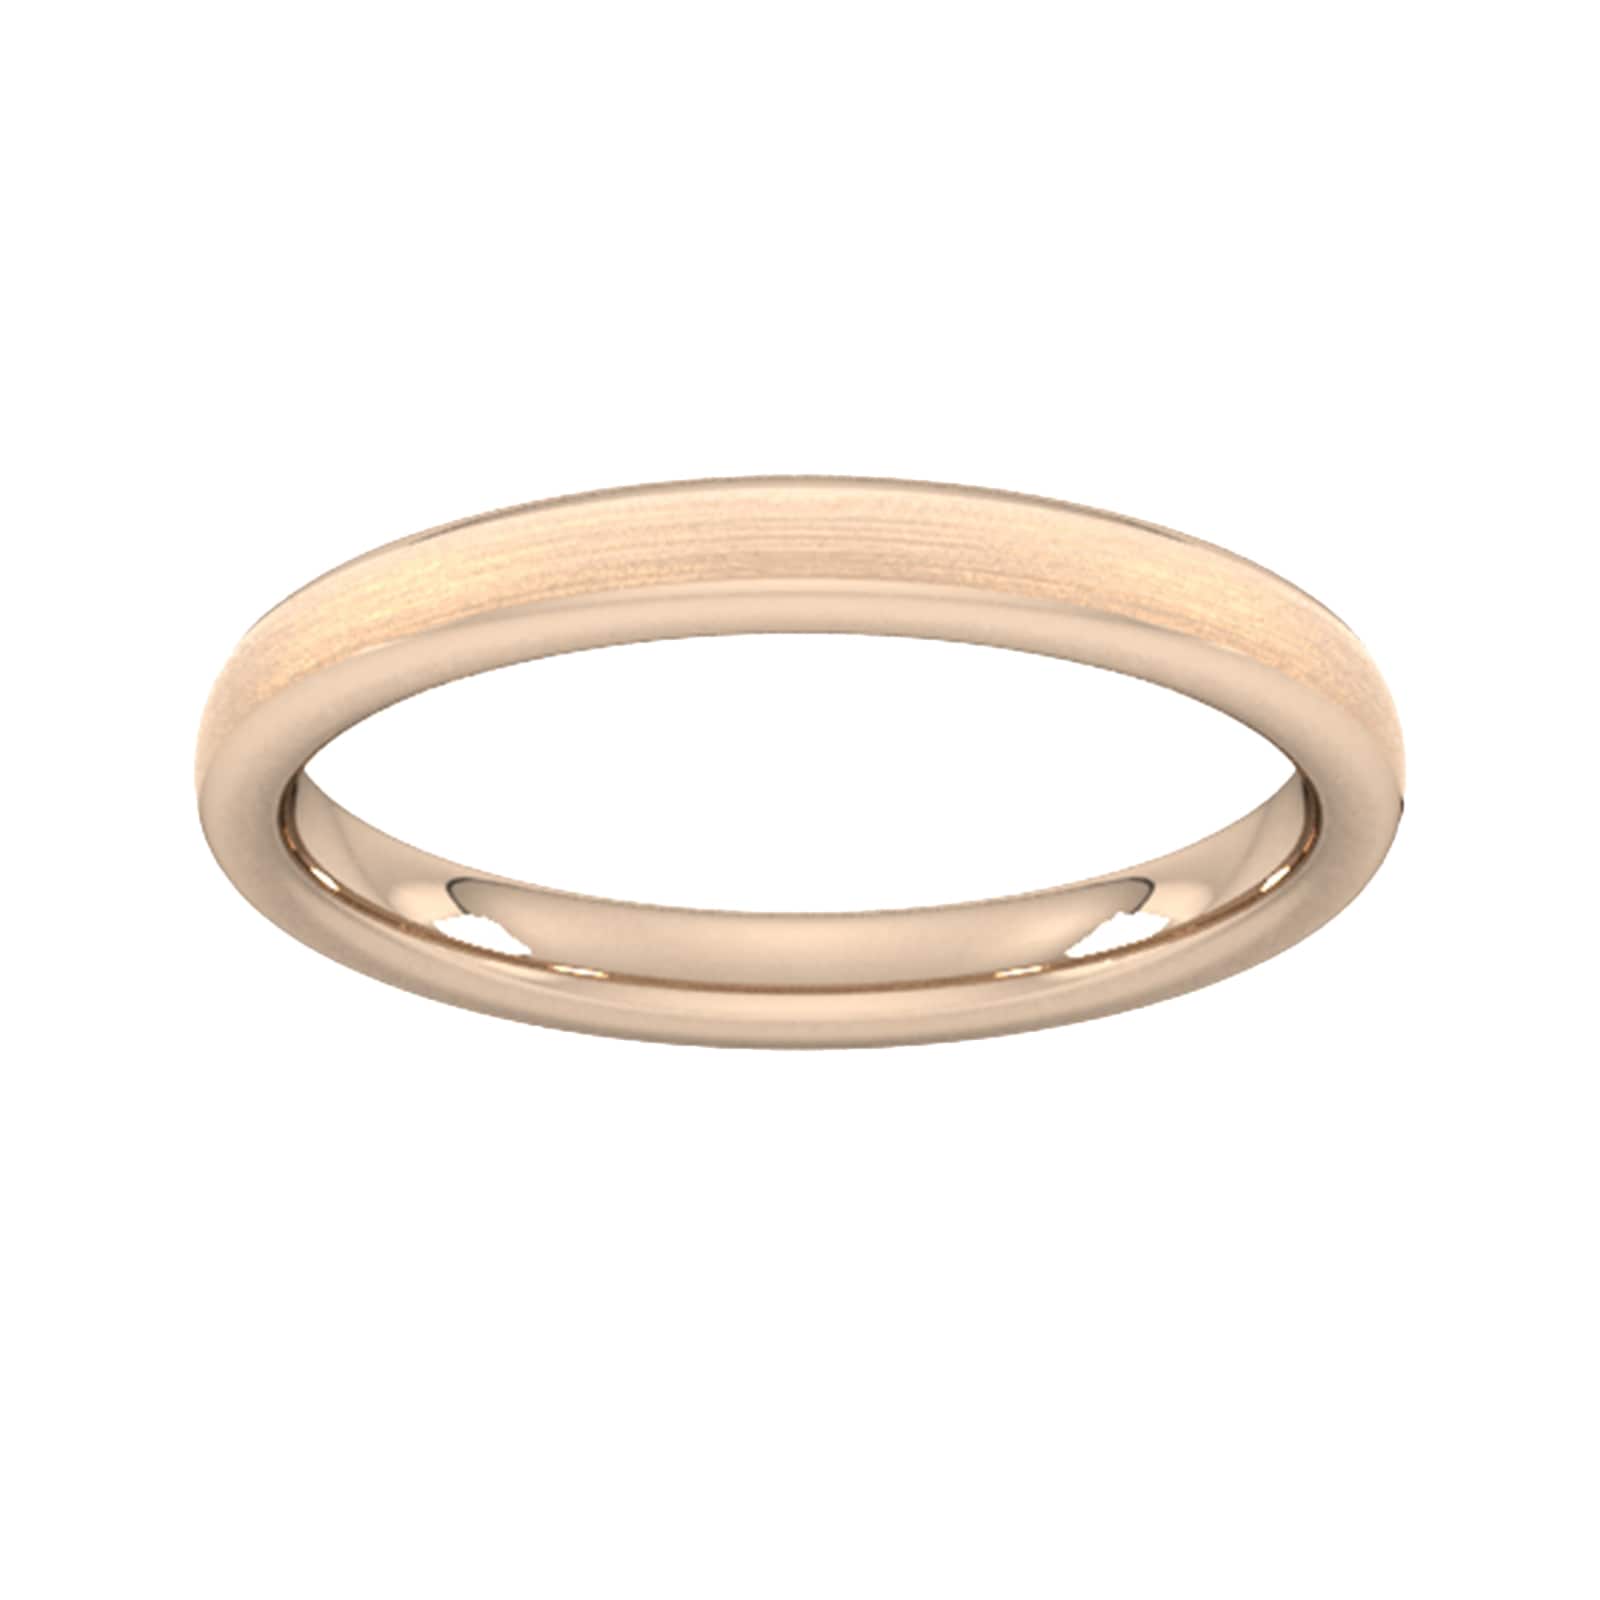 2.5mm Slight Court Standard Matt Finished Wedding Ring In 9 Carat Rose Gold - Ring Size W